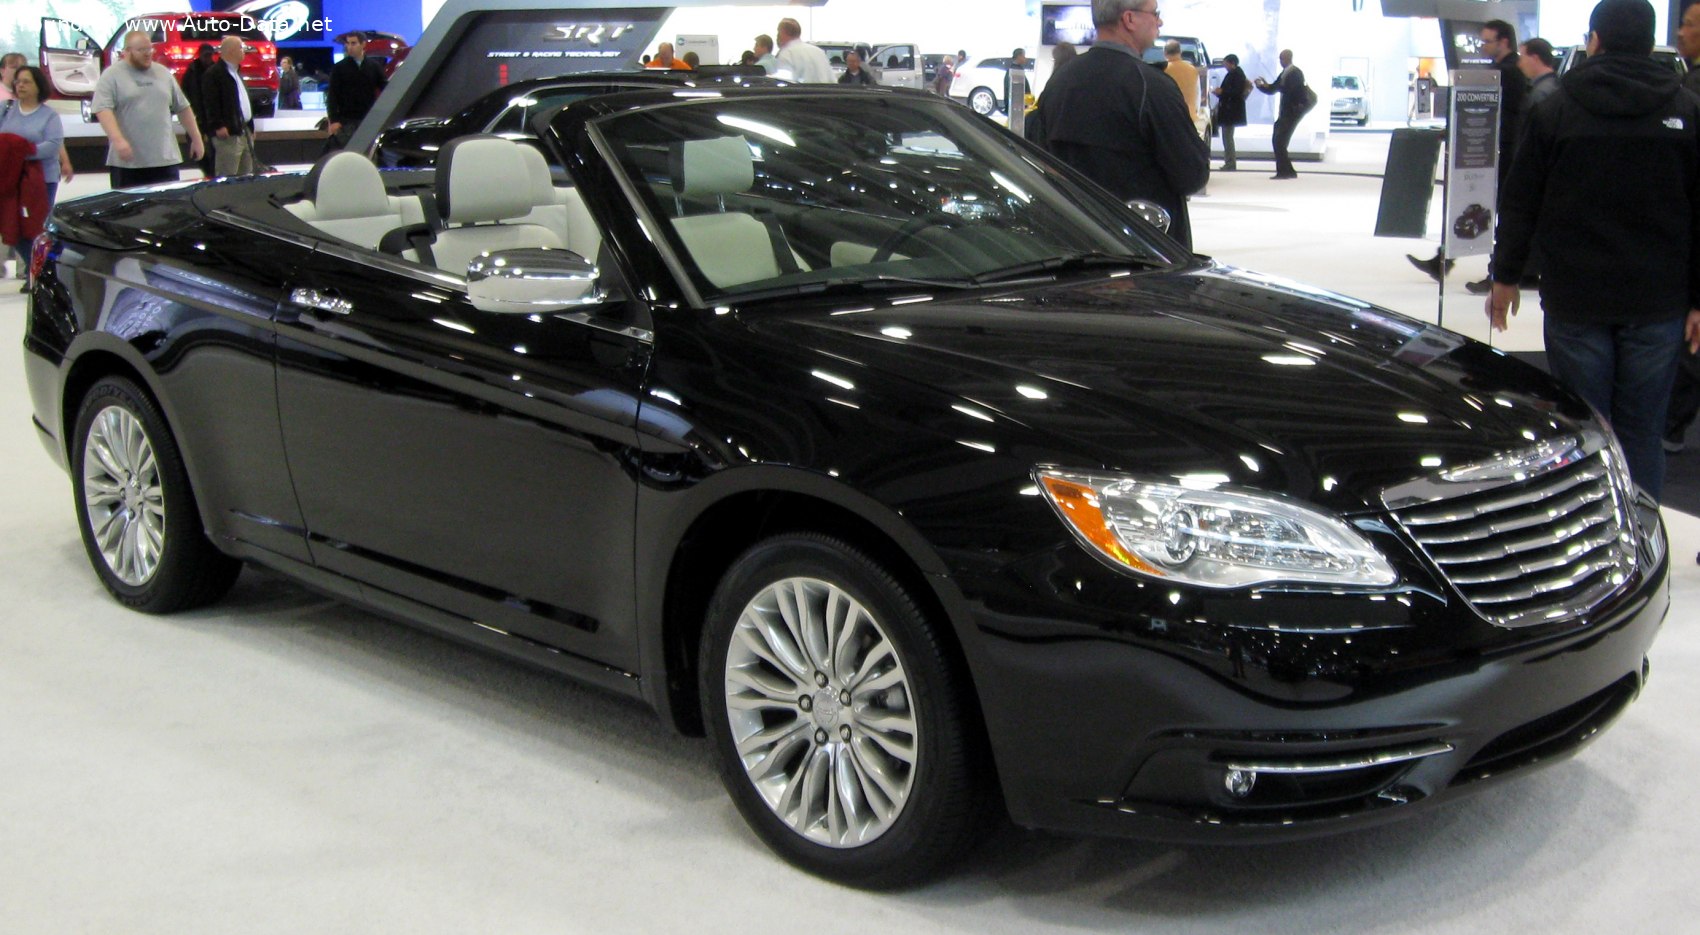 2011 Chrysler 200 I Convertible 3.6 V6 (287 CV) Automatic